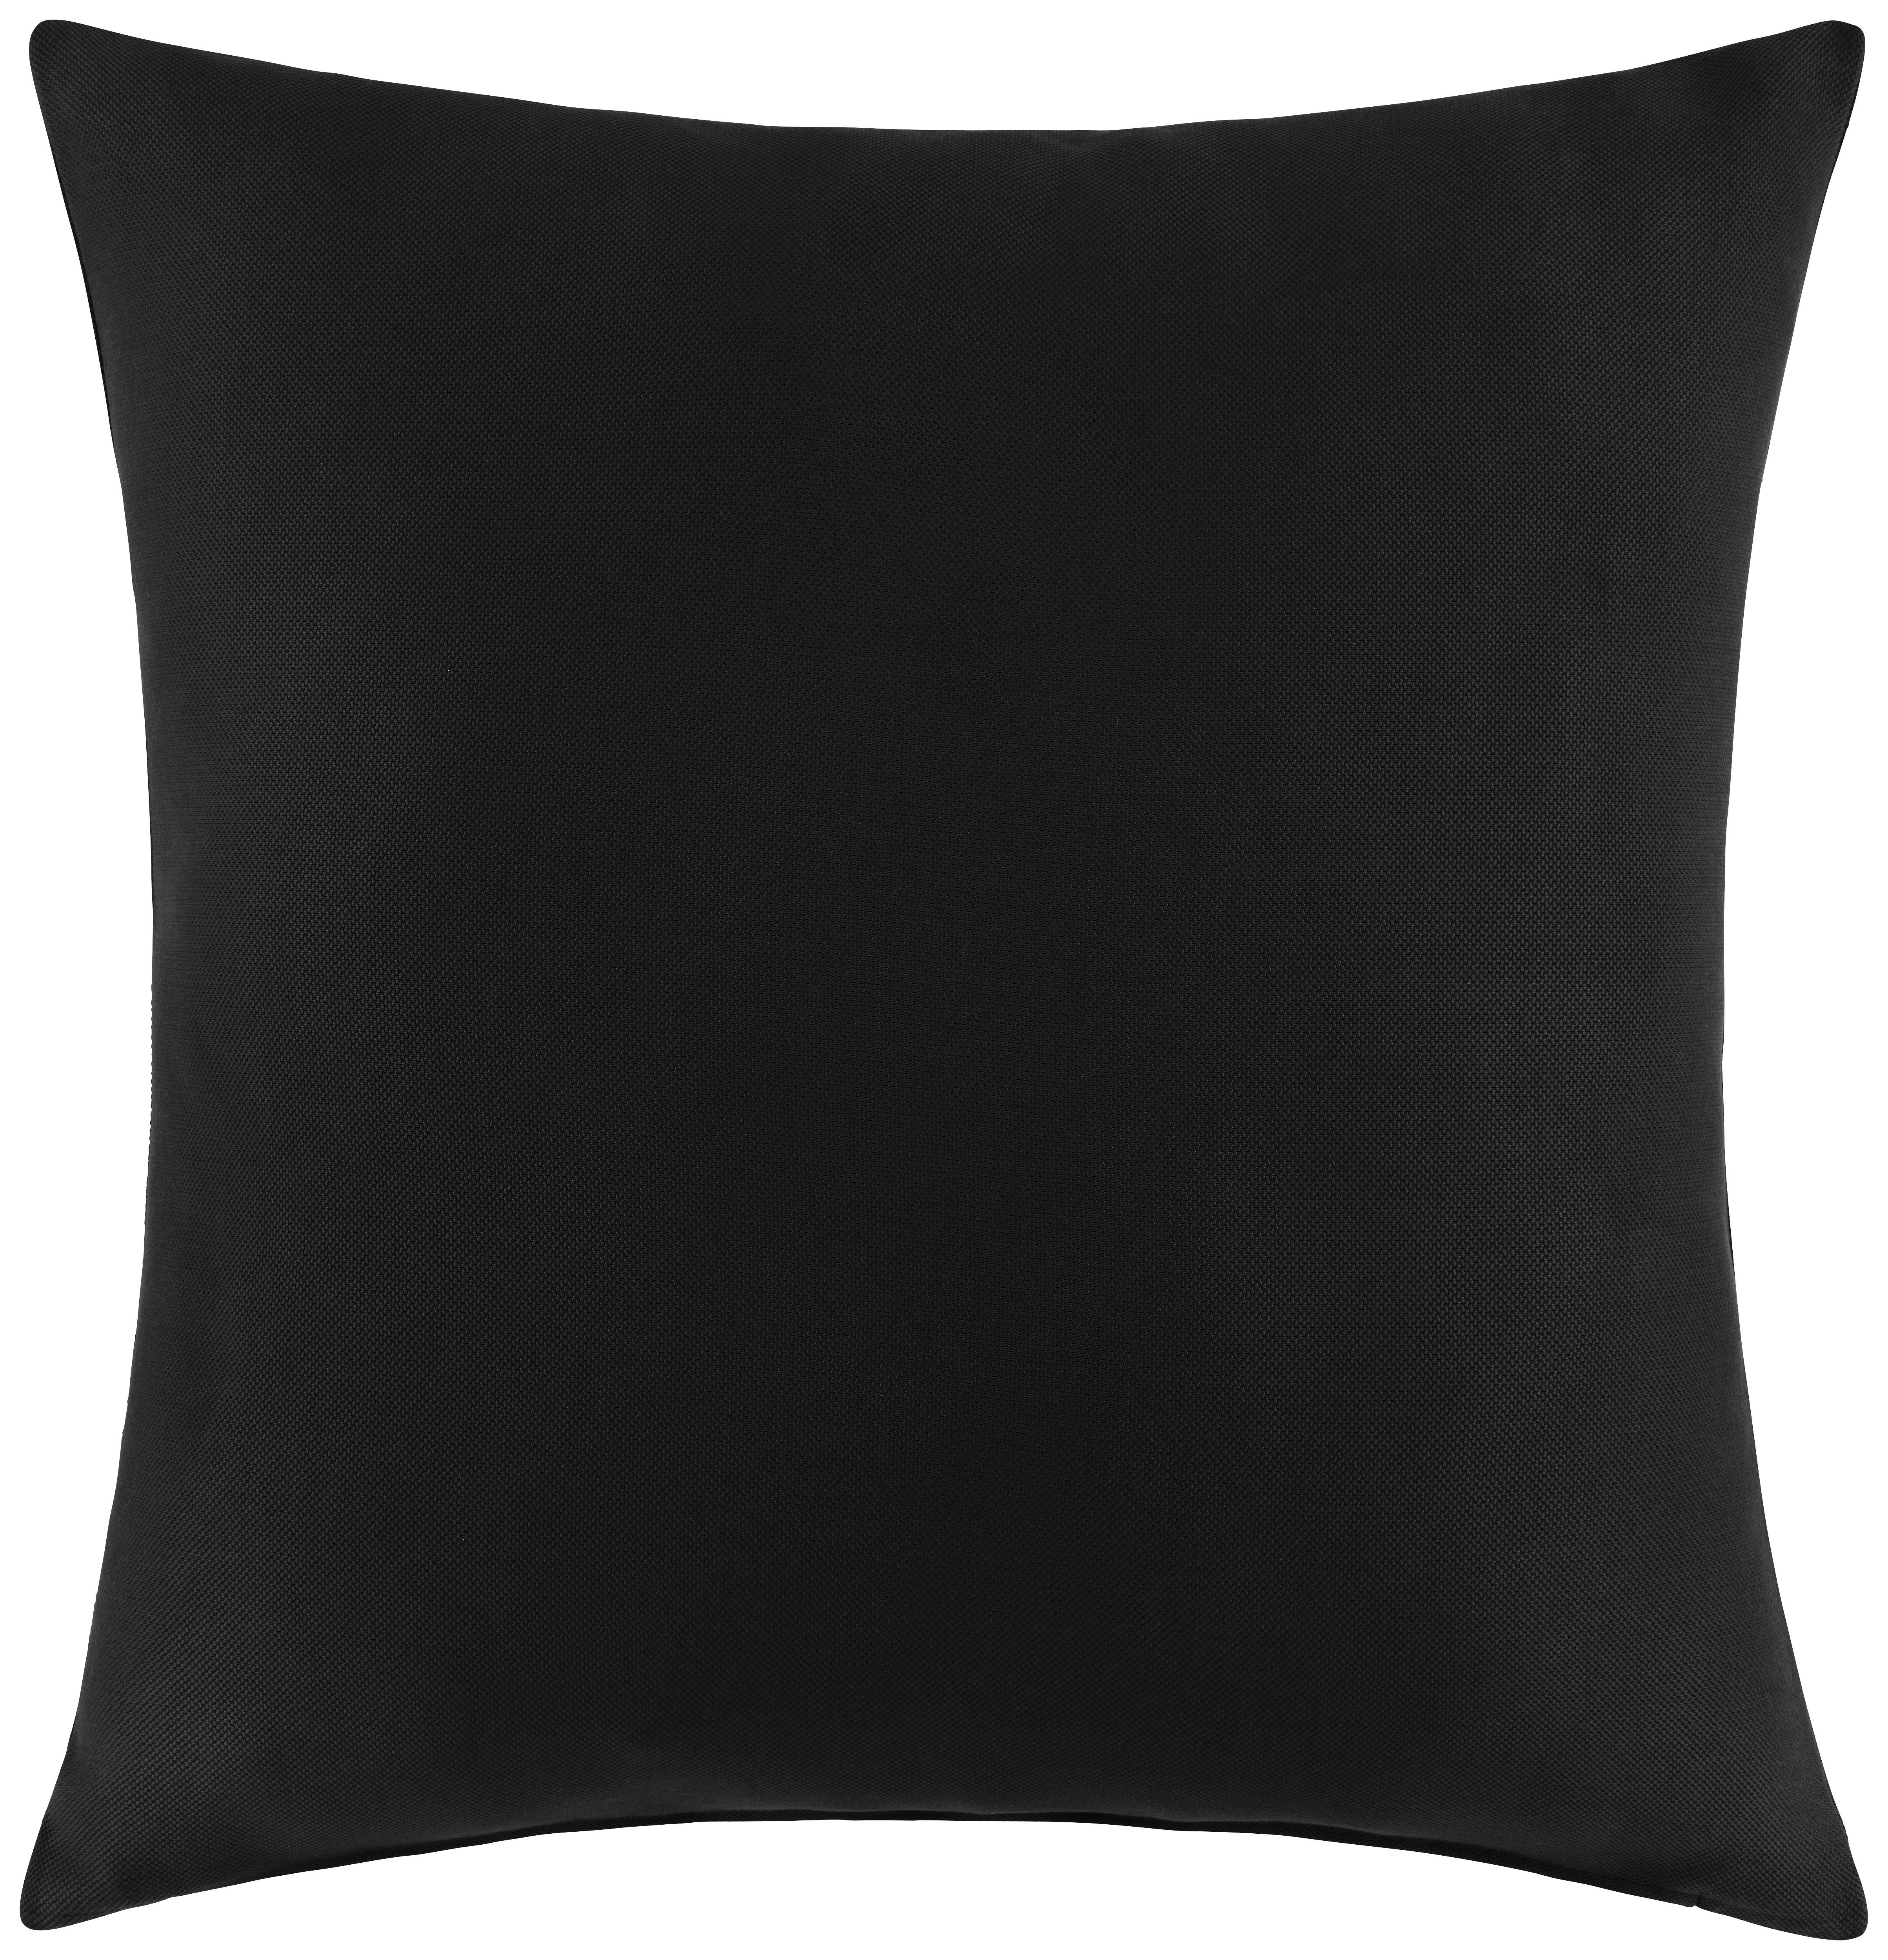 Okrasna Blazina Felix - črna, Konvencionalno, tekstil (60/60cm) - Modern Living